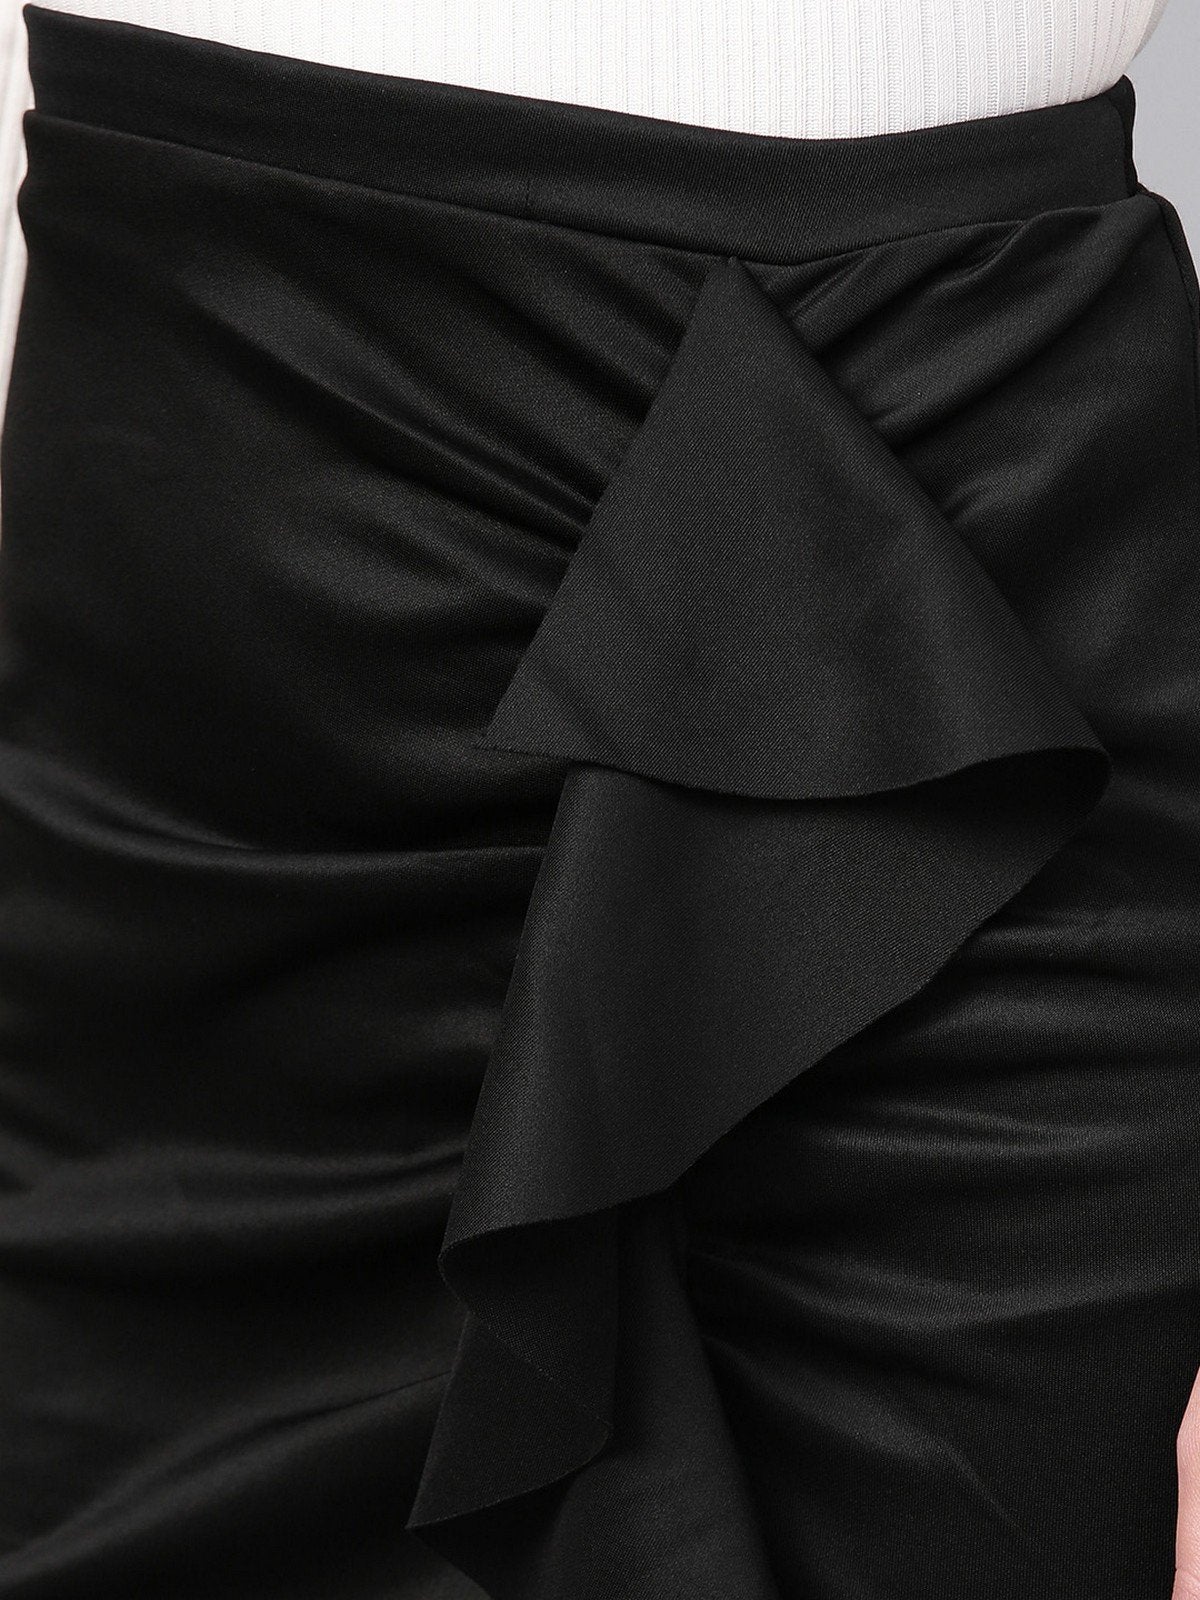 Women's Solid Ruffle Skirt - Pannkh